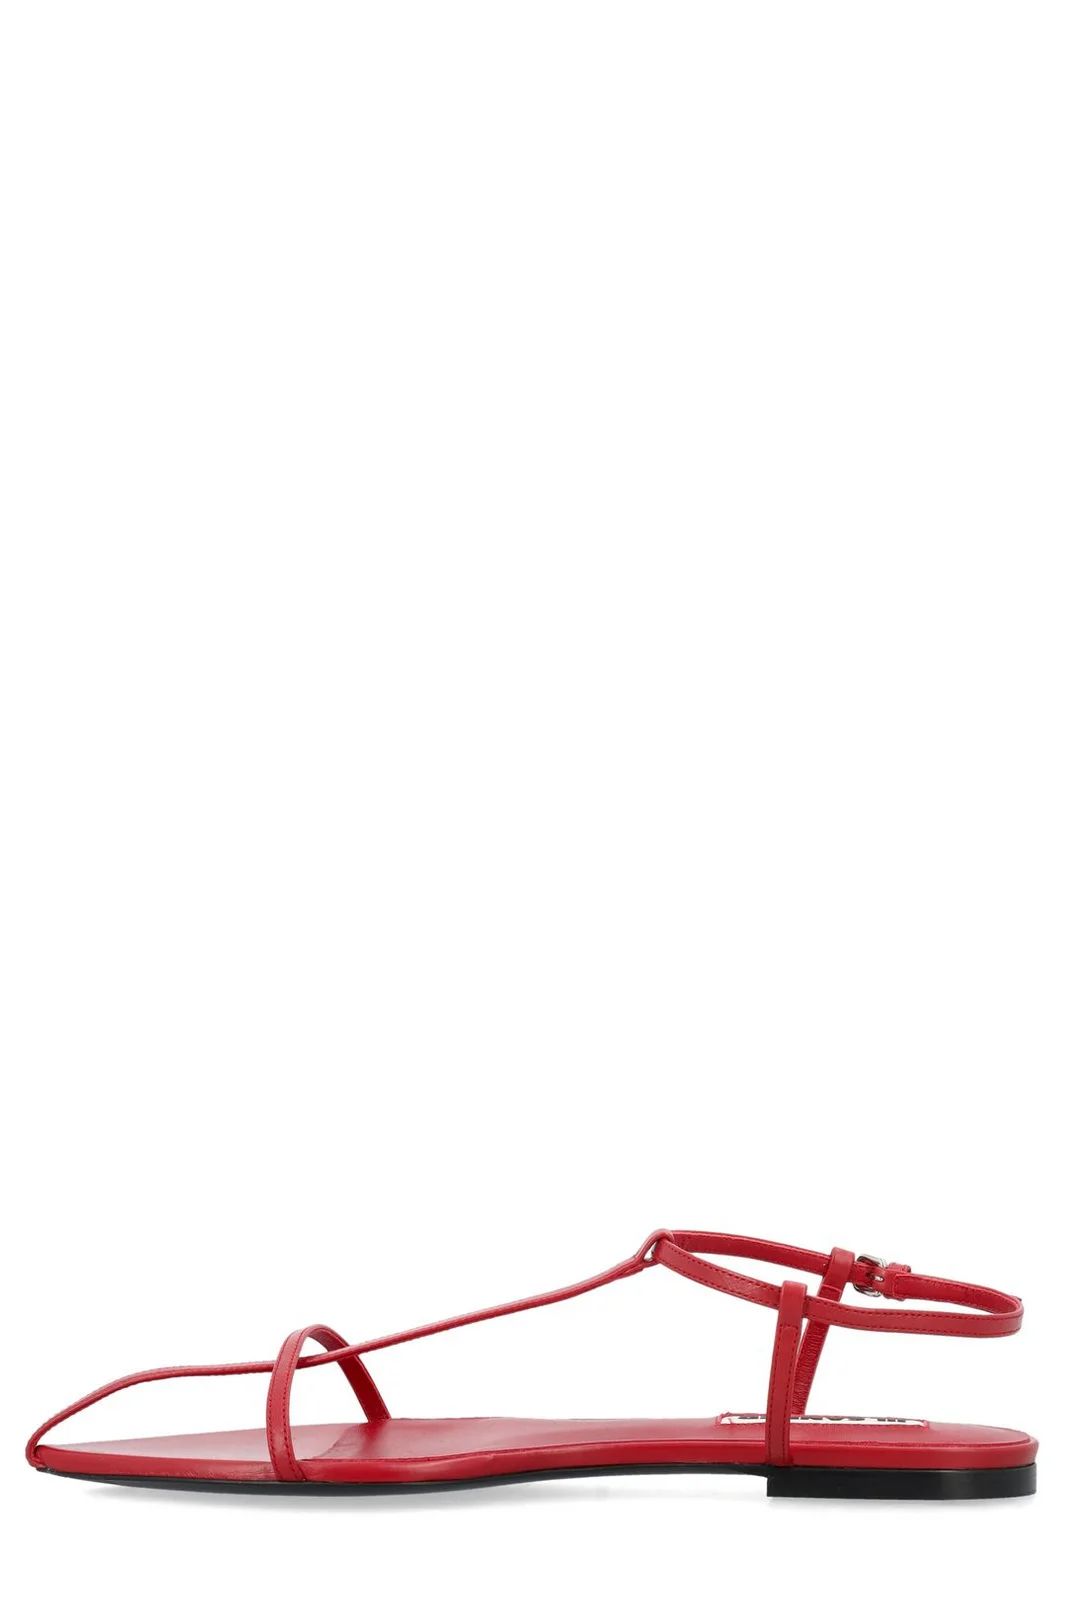 Jil Sander Pointed-Toe Caged Sandals | Cettire Global